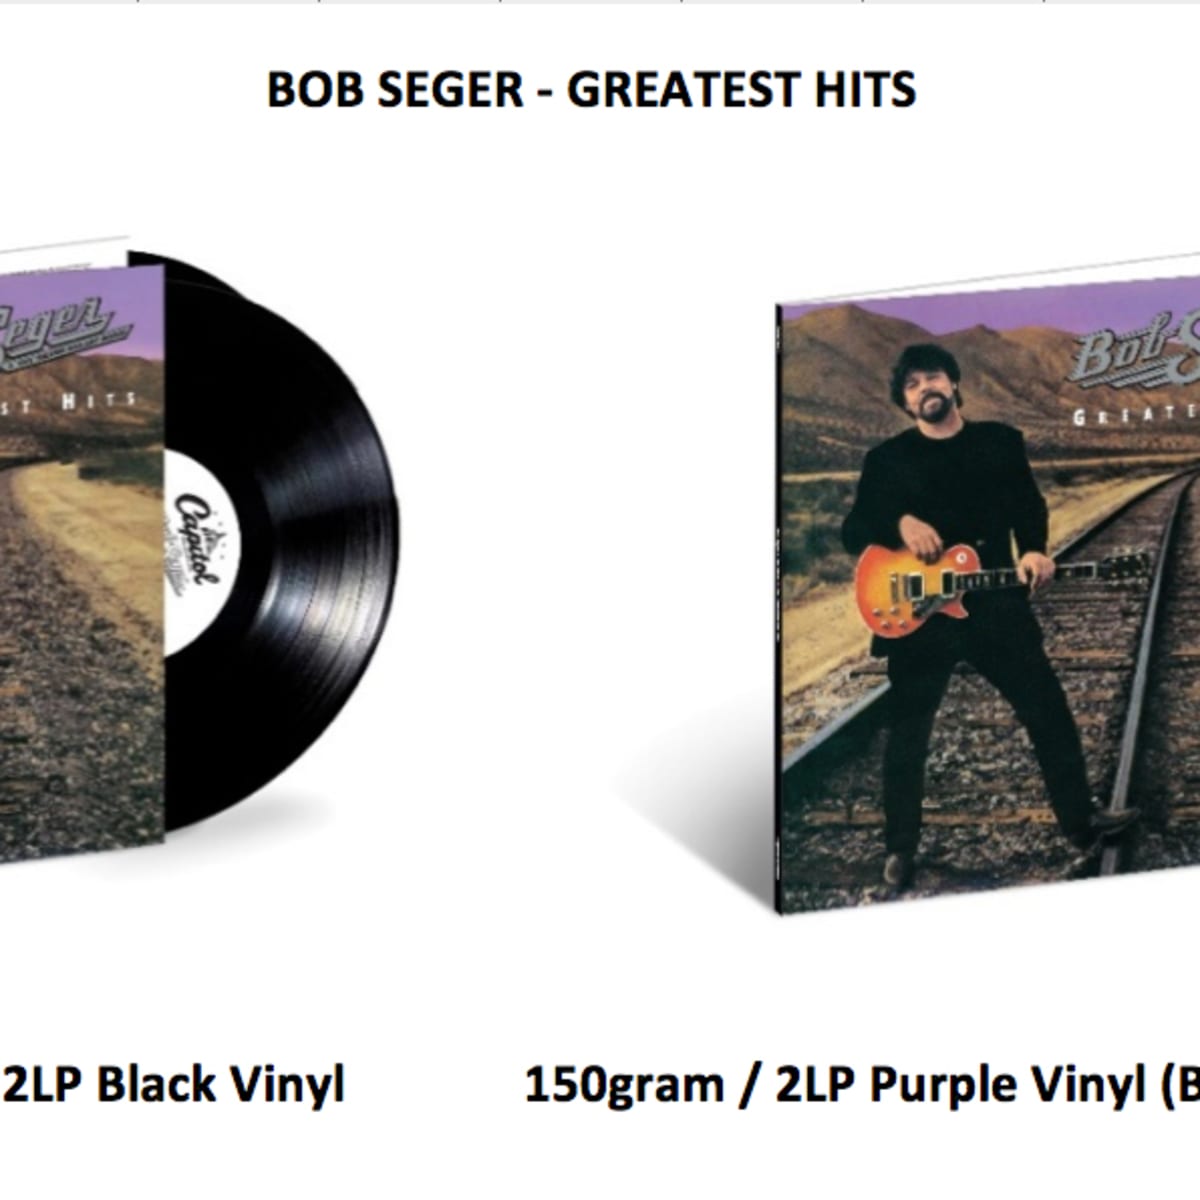 Bob Seger Greatest Hits And Ramblin Gamblin Man To Come Out On Vinyl Goldmine Magazine Record Collector Music Memorabilia